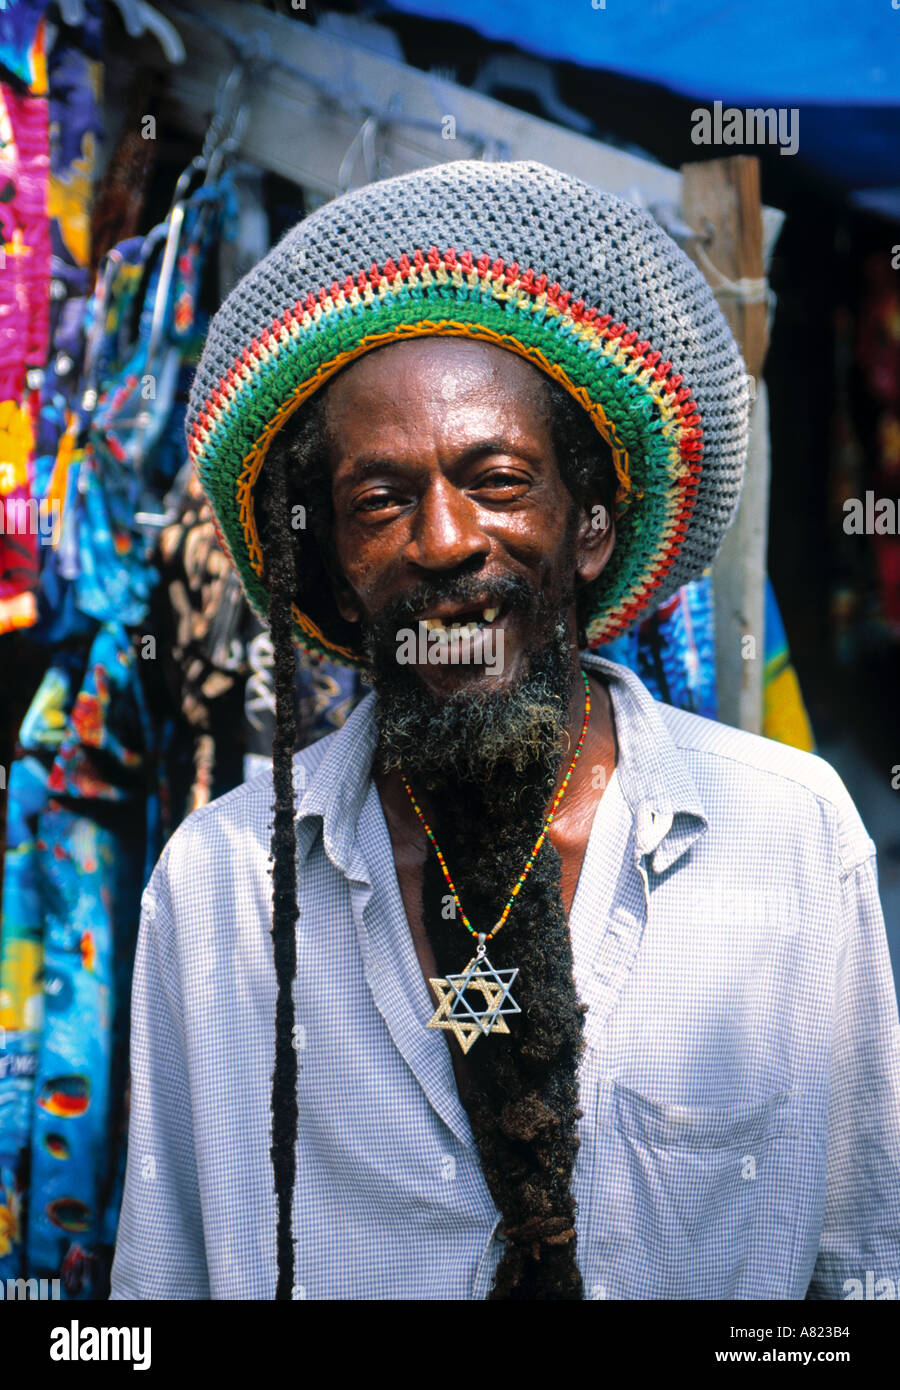 Portrait of Jamaican man, Jamaica Stock Photo - Alamy